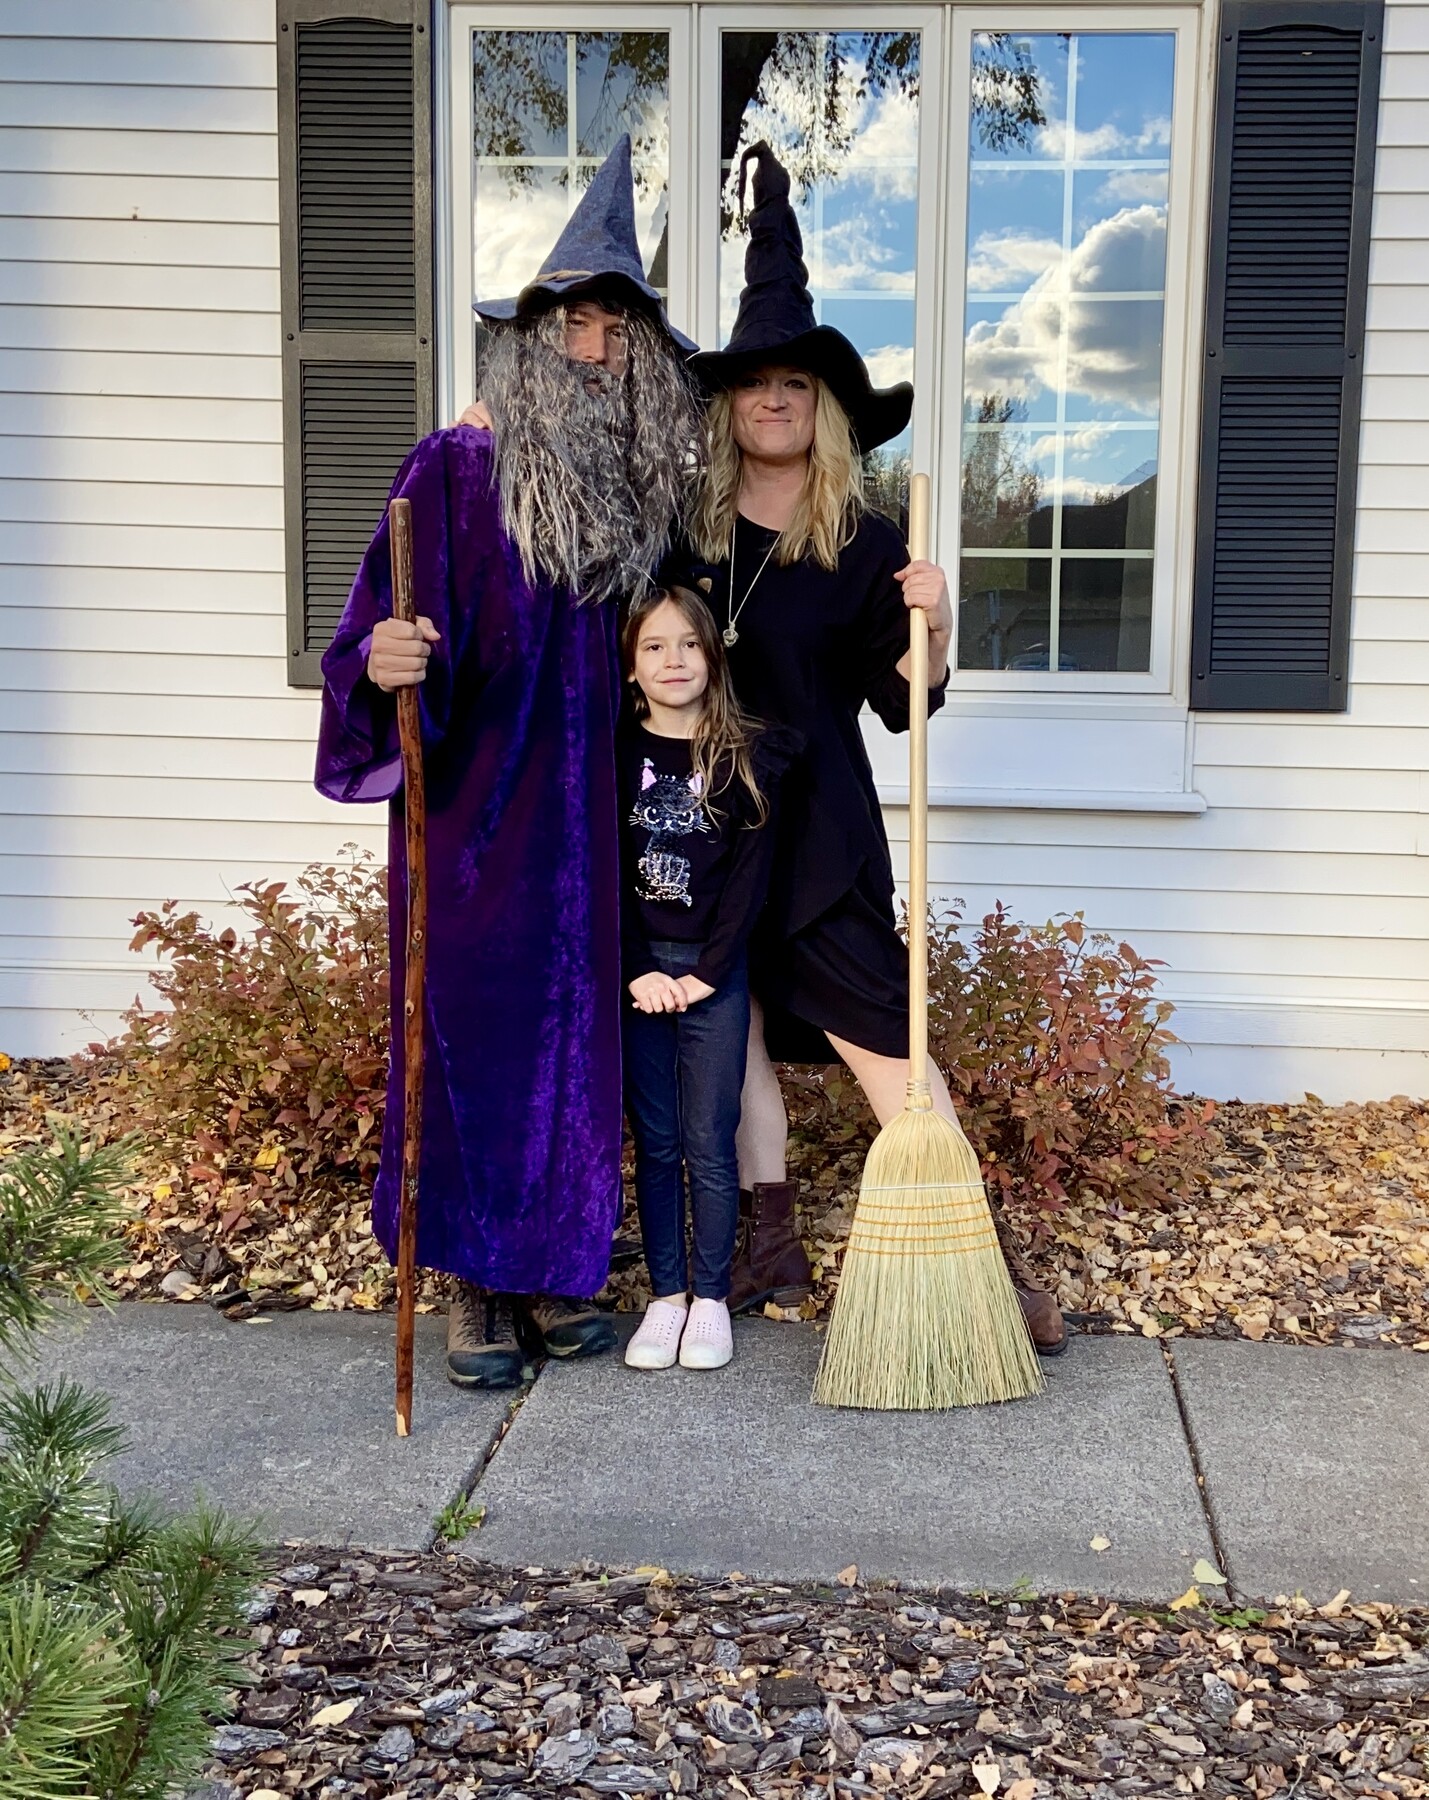 Wizard, Cat, Witch